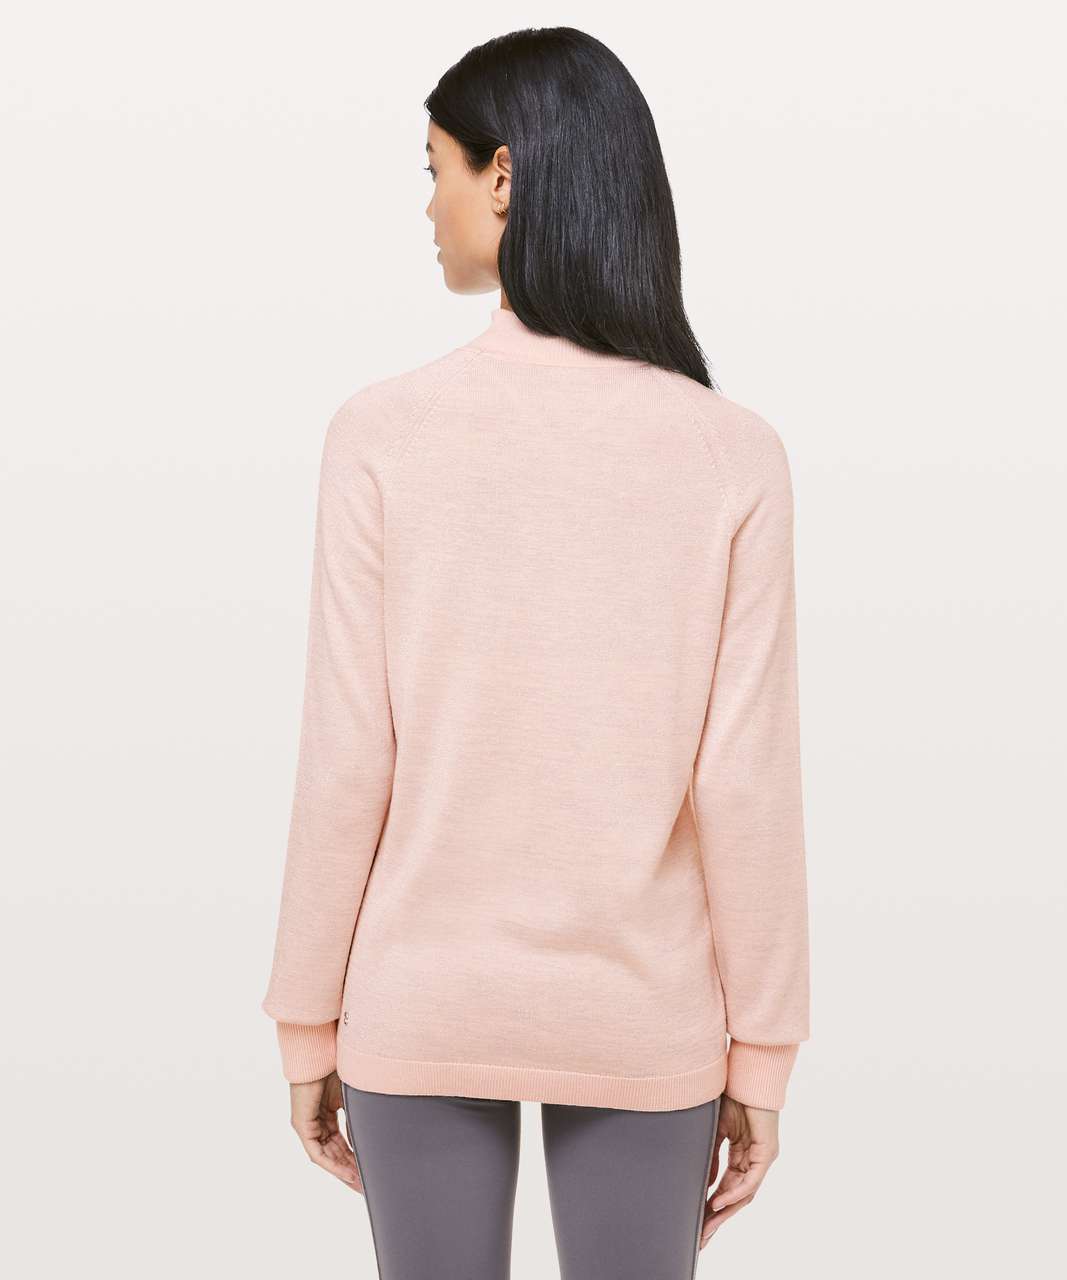 Lululemon Soft Shine Sweater - Misty Pink / Antique Silver